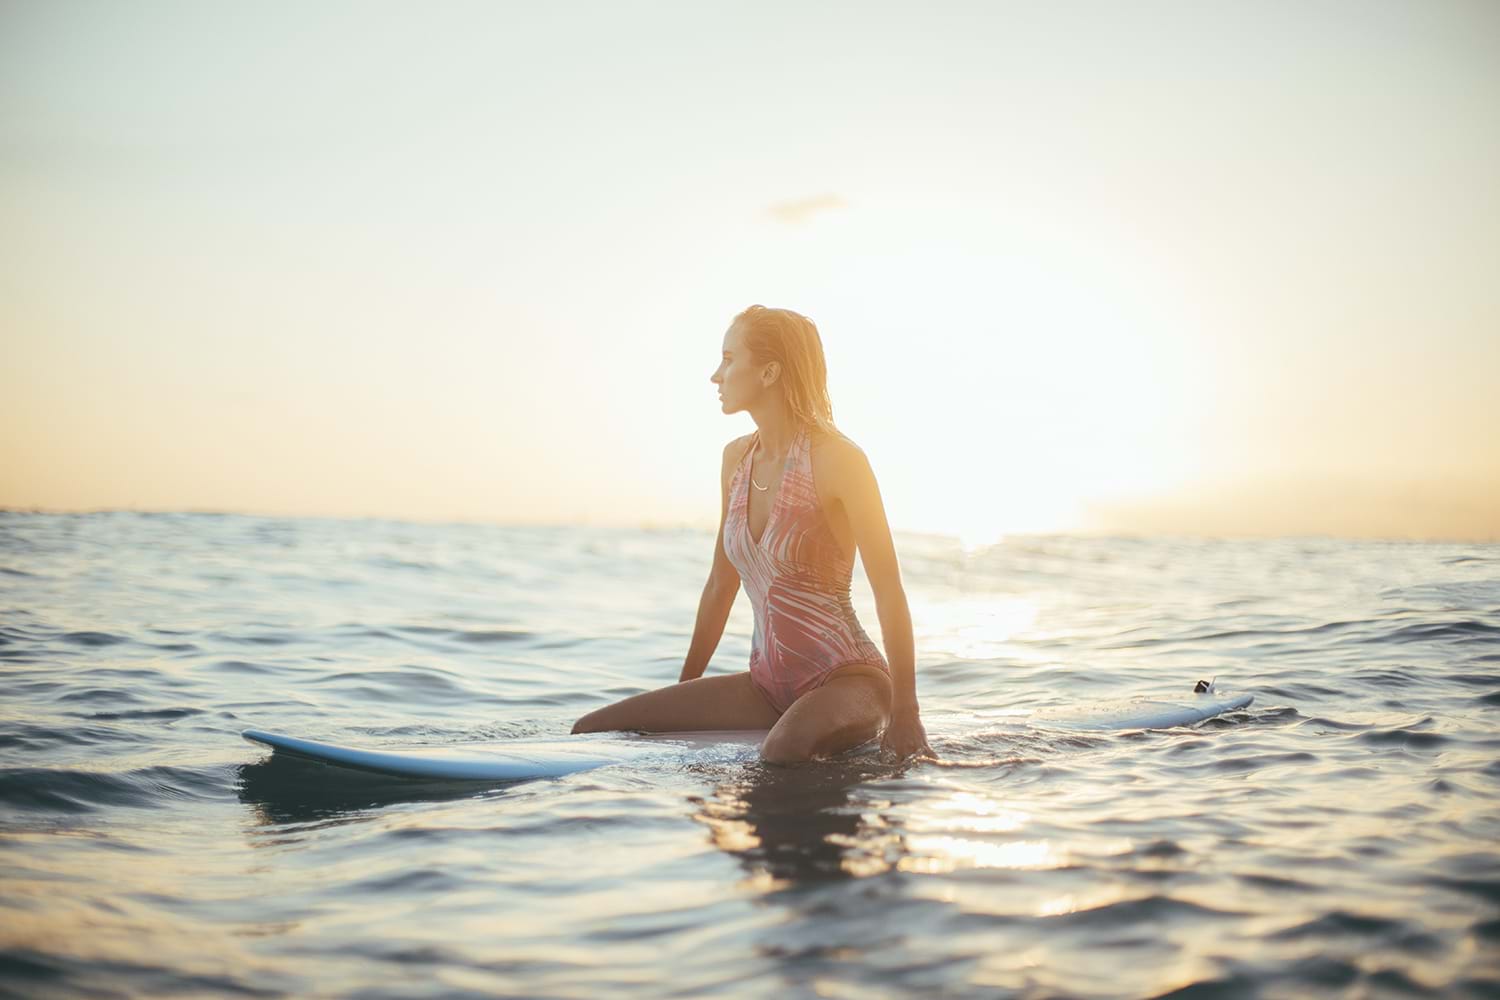 Woman sitting on surfboard floating in water